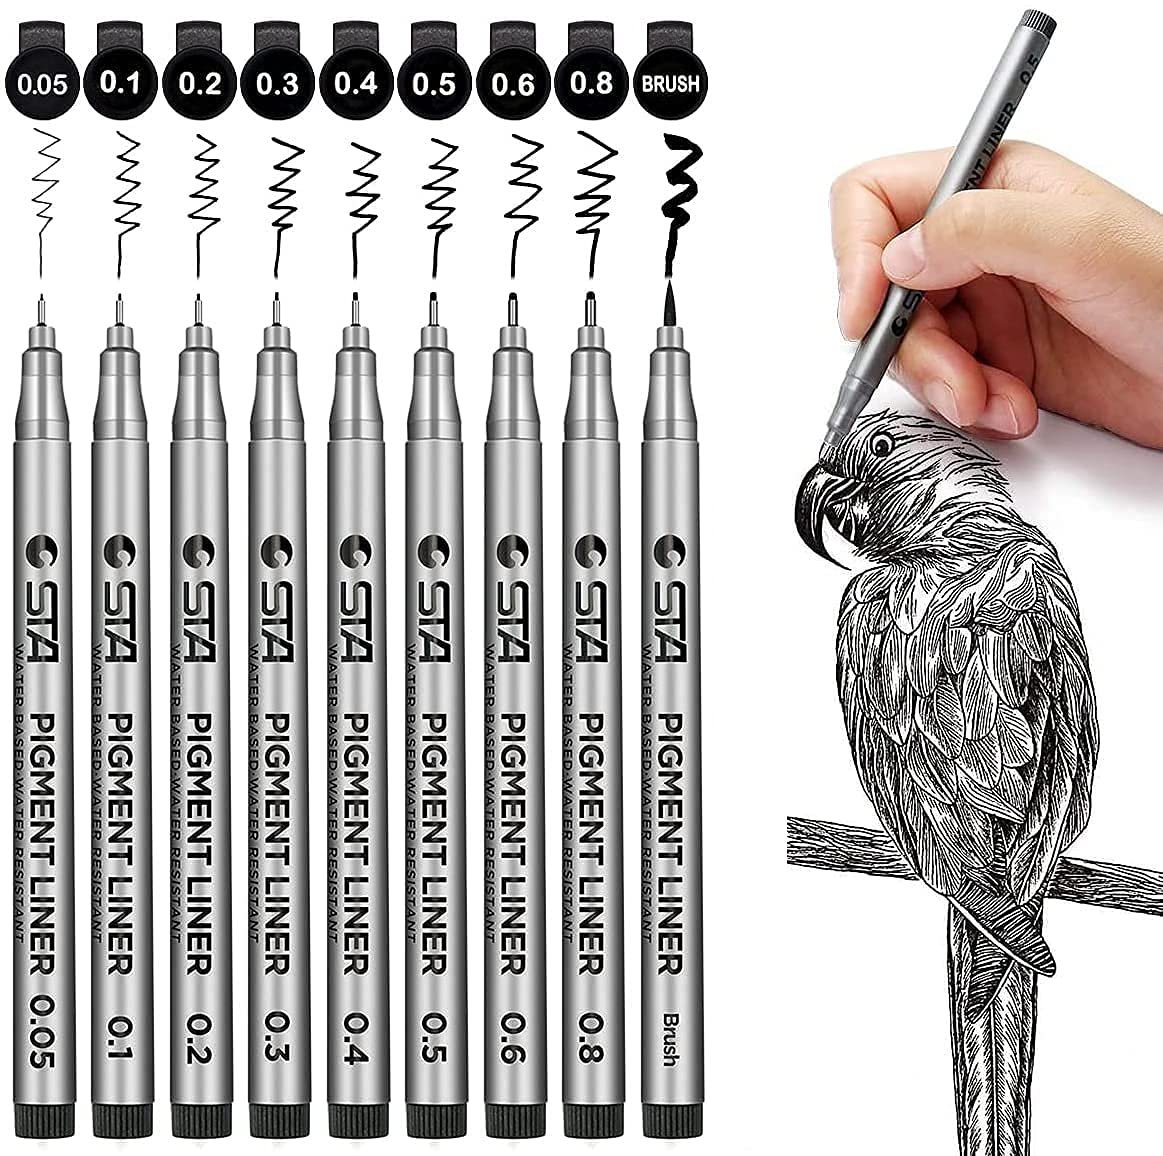 WRITECH Liquid Fineliner Pens Black Precision Multiliner Micro Pen 9 Pack, Quick Dry Waterproof Pigment Ink Drawing Pen for Journaling Planning Hand